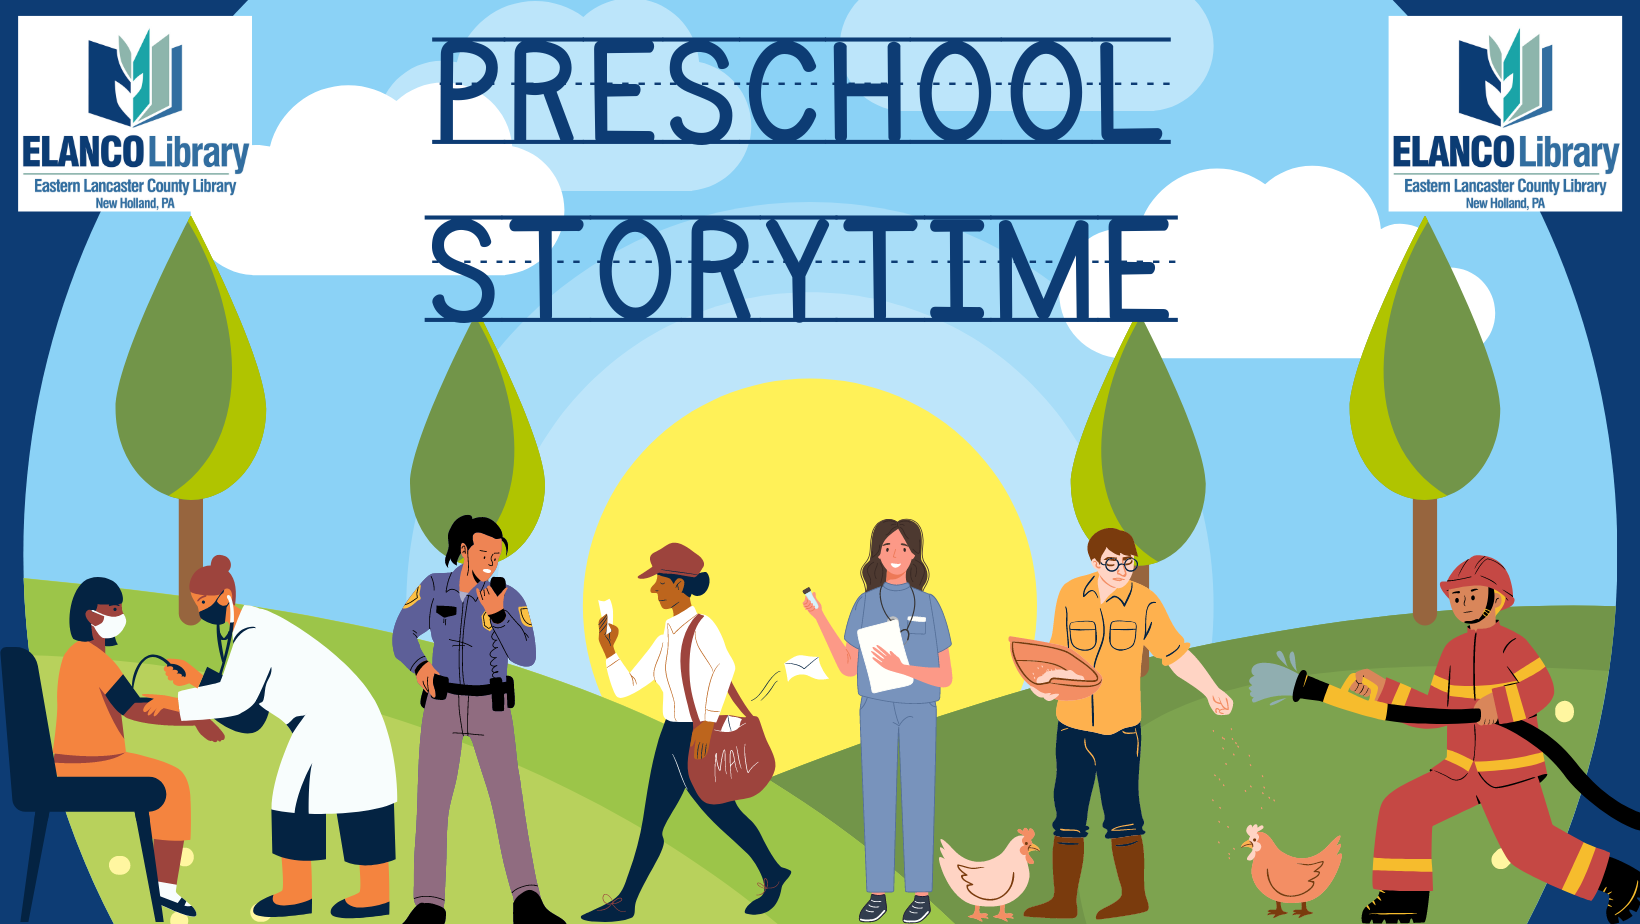 Preschool Storytime